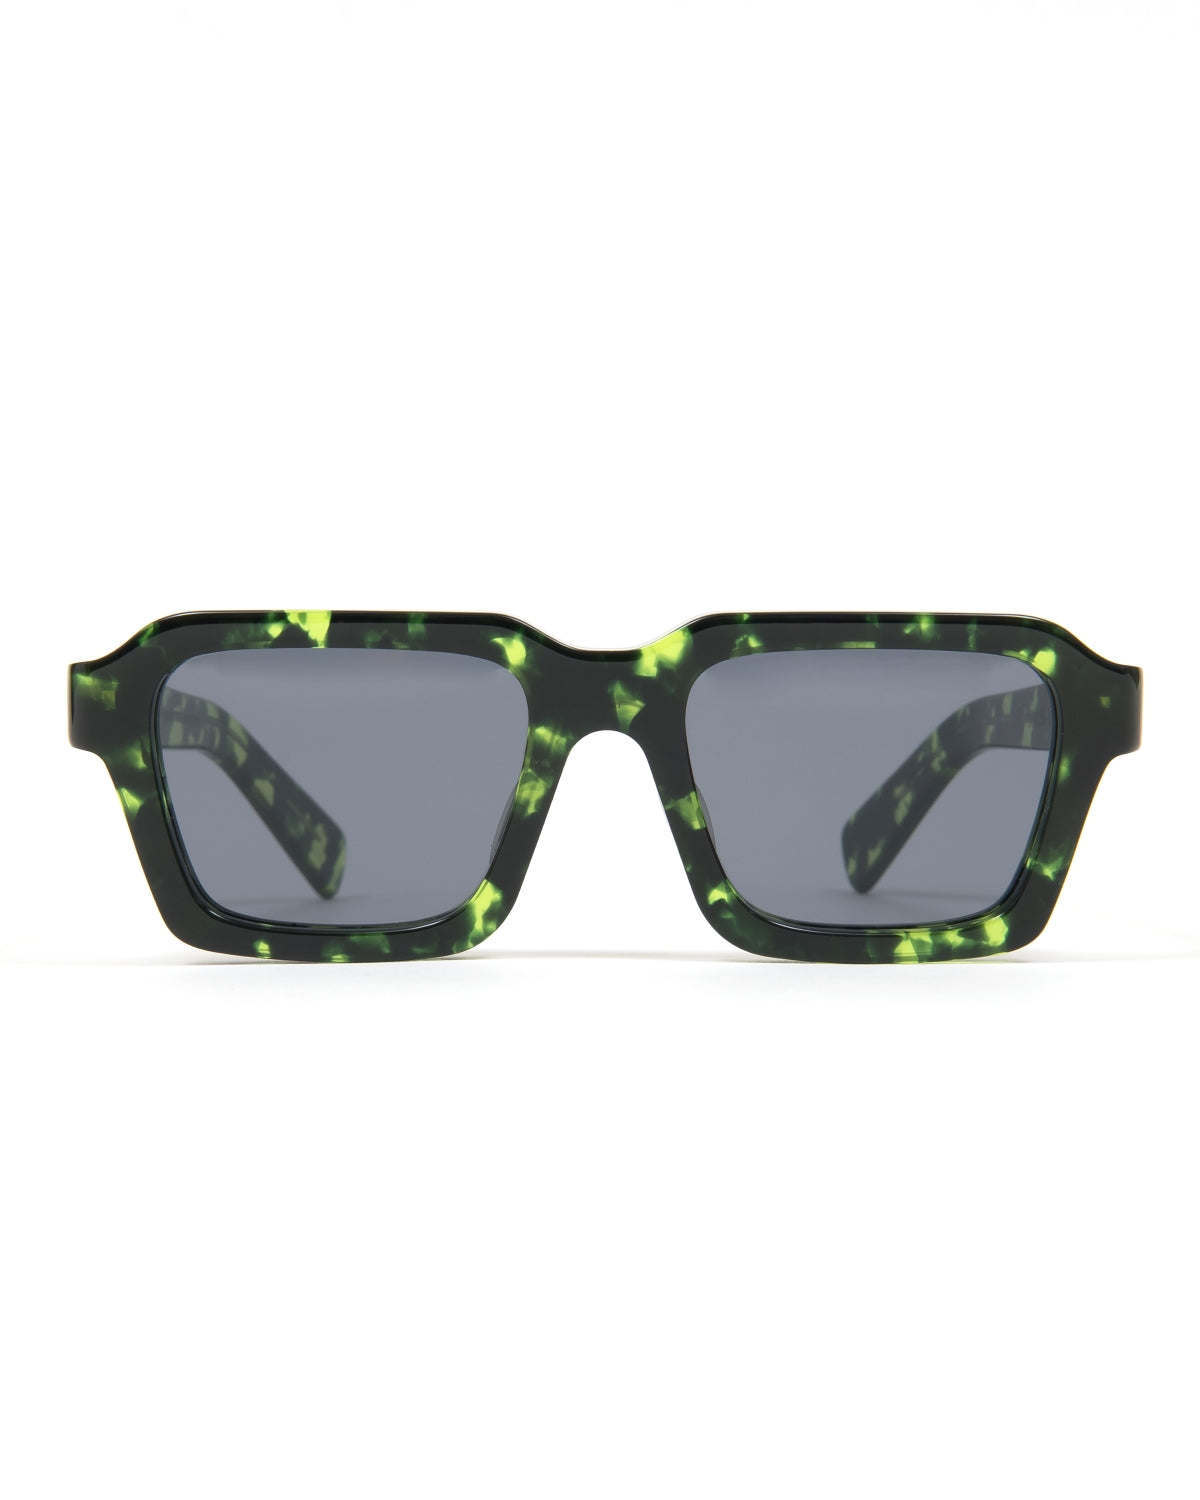 Staunton Post Modern Primitive Eye Protection - Black-Green Tortoise/Black 1